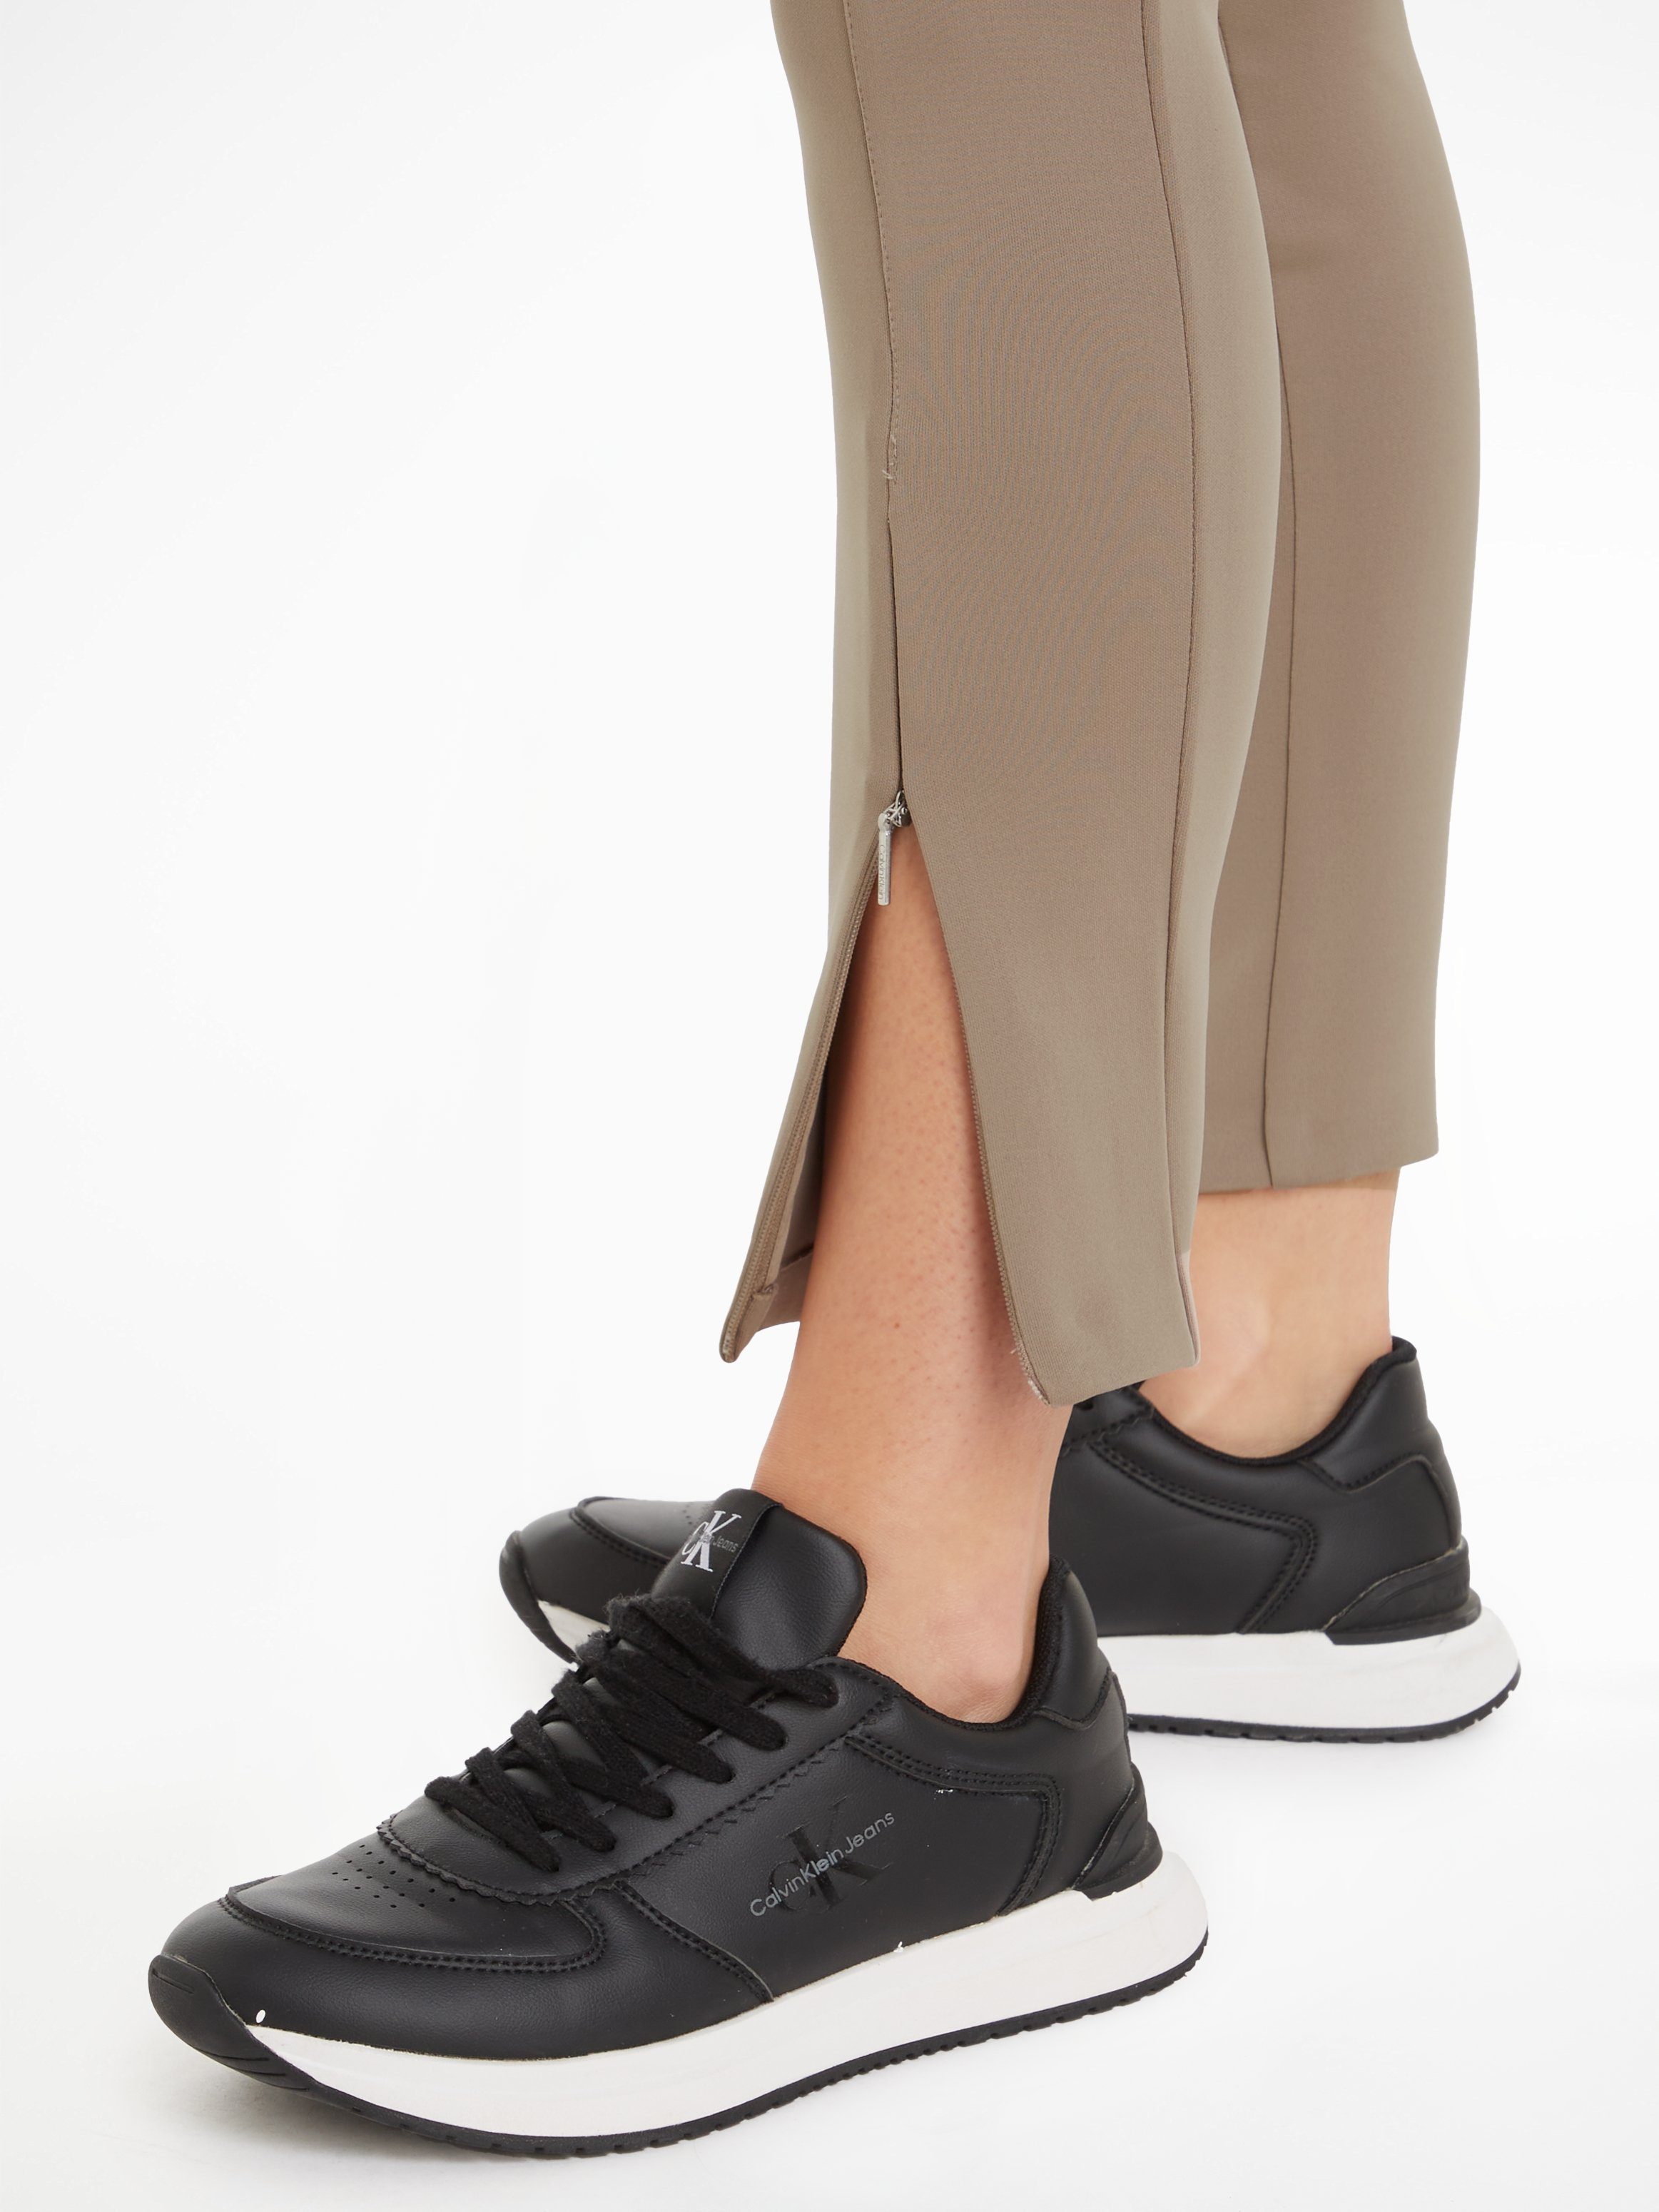 Calvin Klein Leggings TECHNICAL KNIT LEGGING Beinabschluss grey mit Reißverschluss am